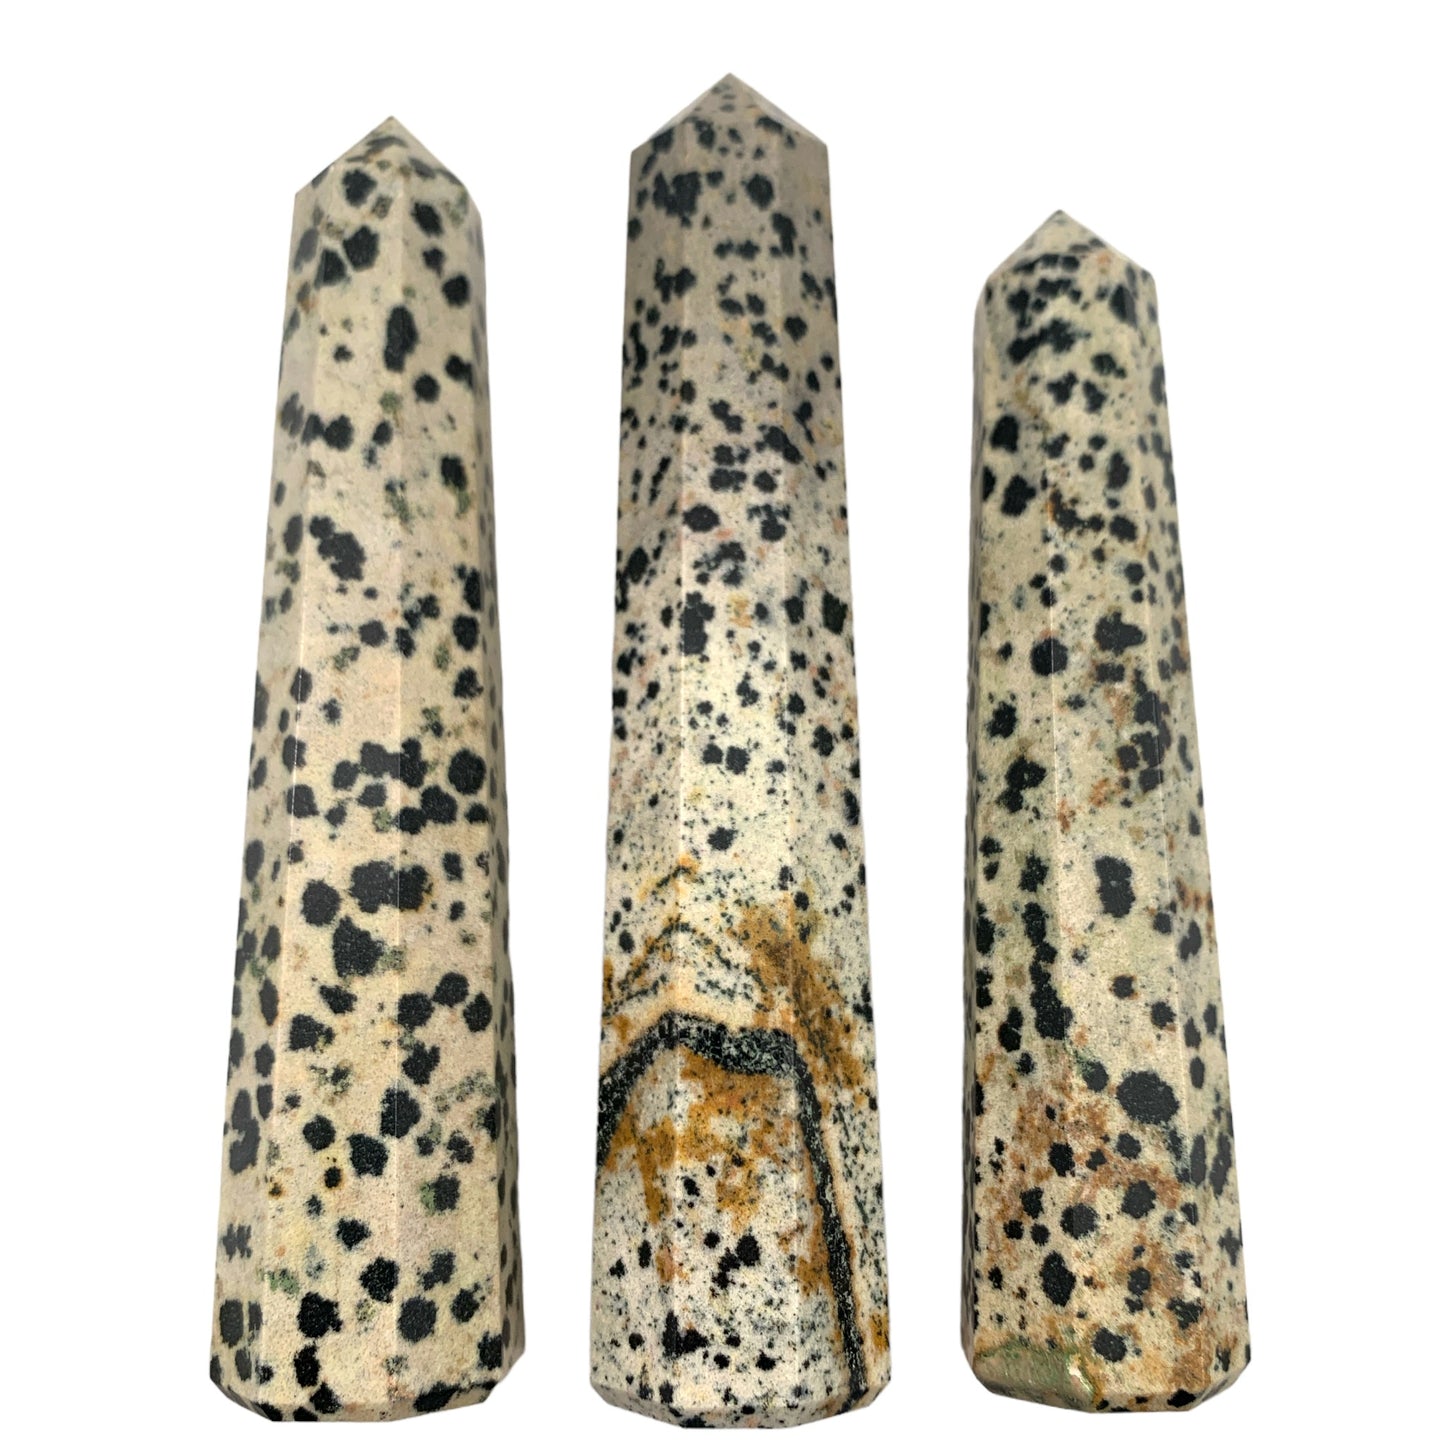 Dalmatian Jasper - 3.5 to 4.5 inch - India - Price per gram - NEW422 - Polished Points